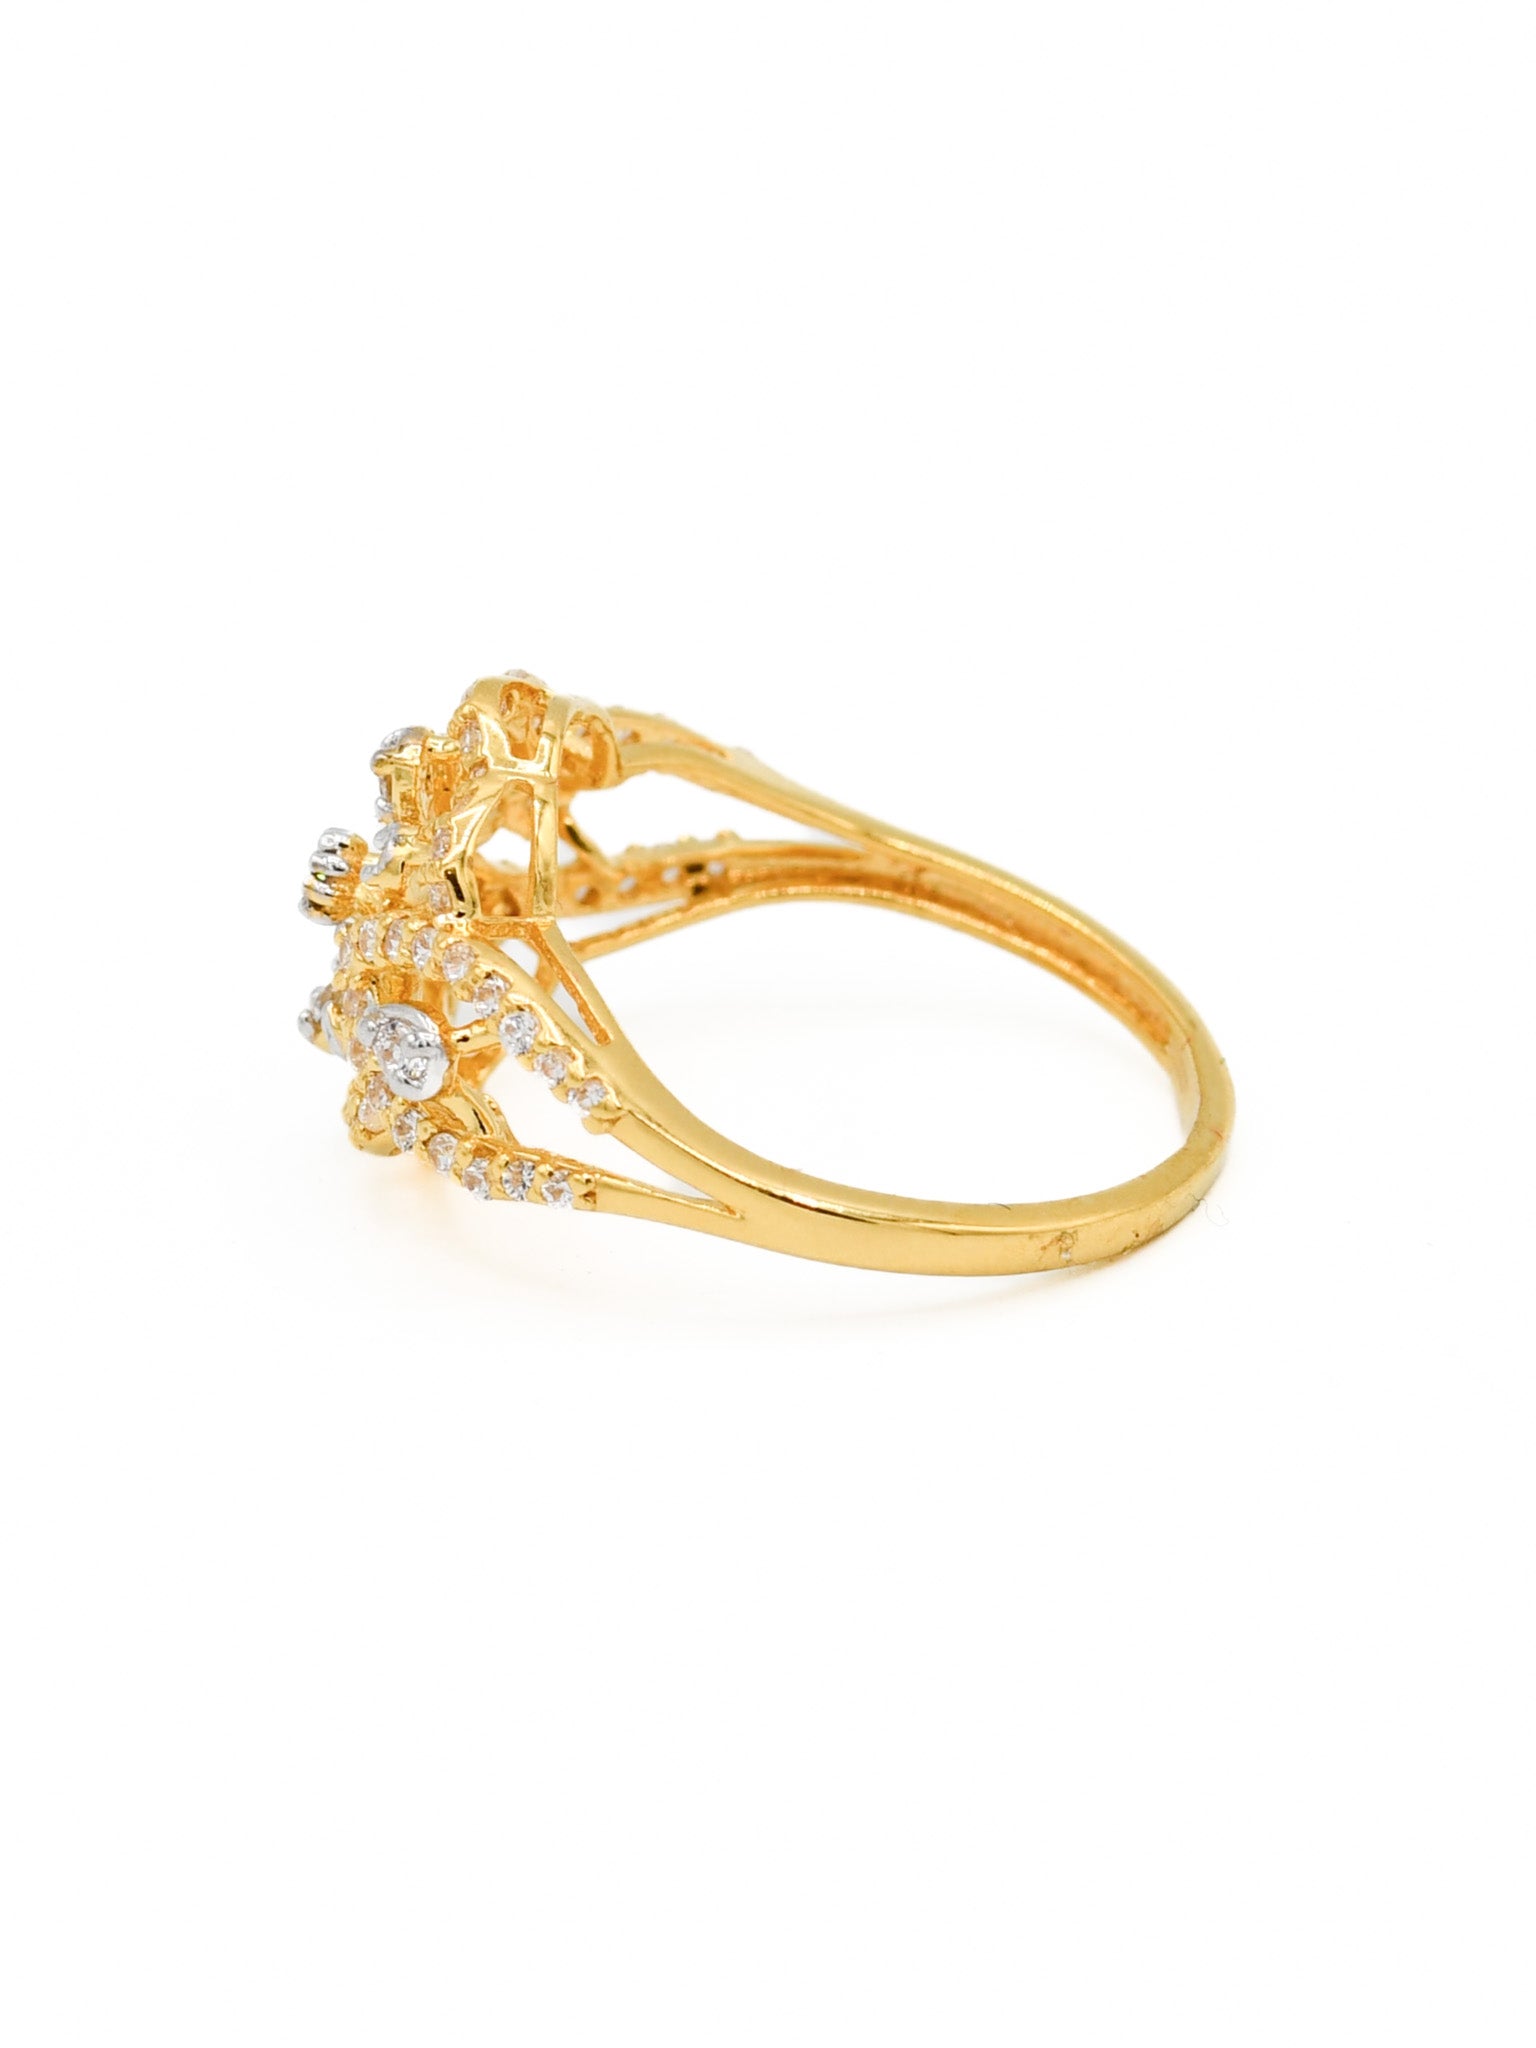 Gold Diamond Ring With Ruby - Manik Chand Jeweller KOLKATA